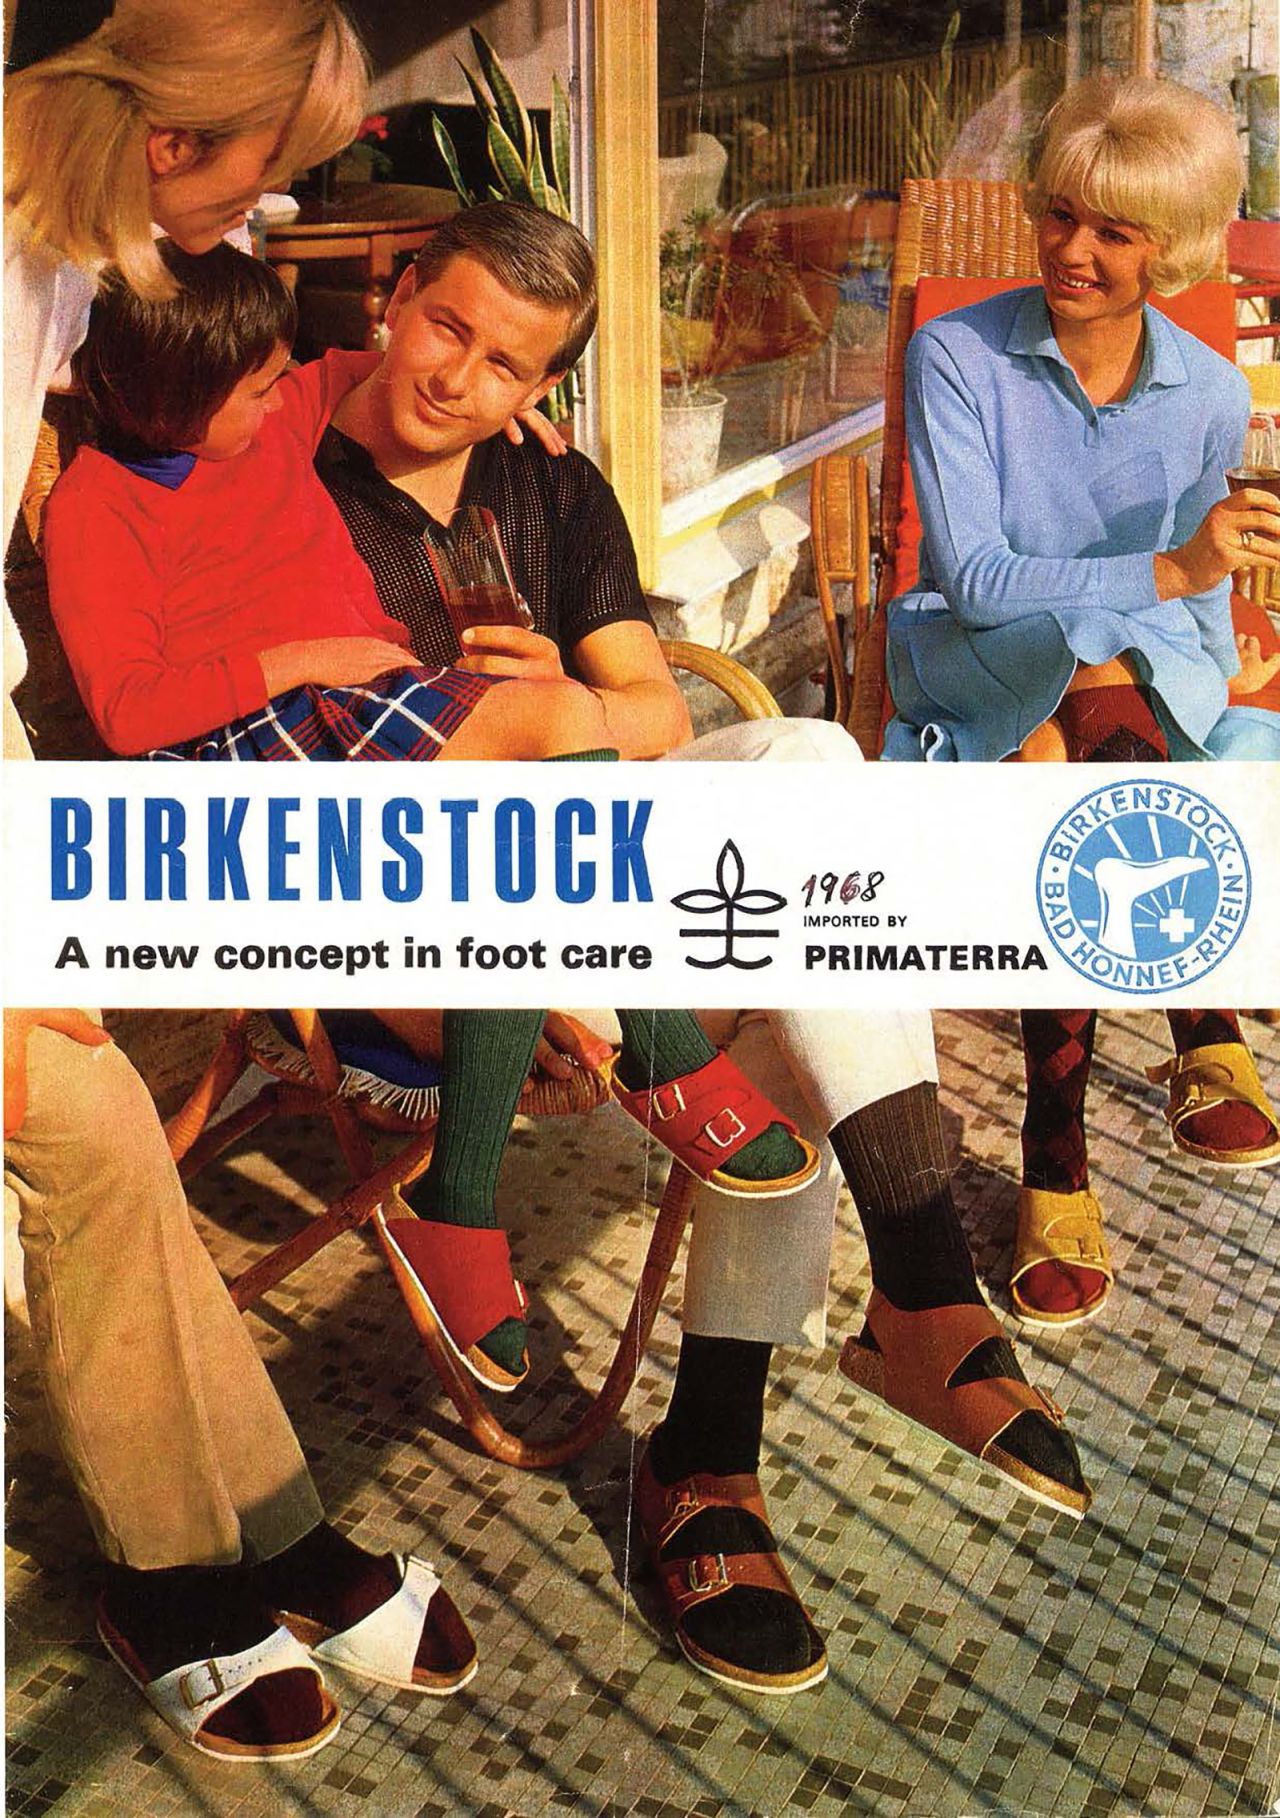 Birkenstock ad from 1968